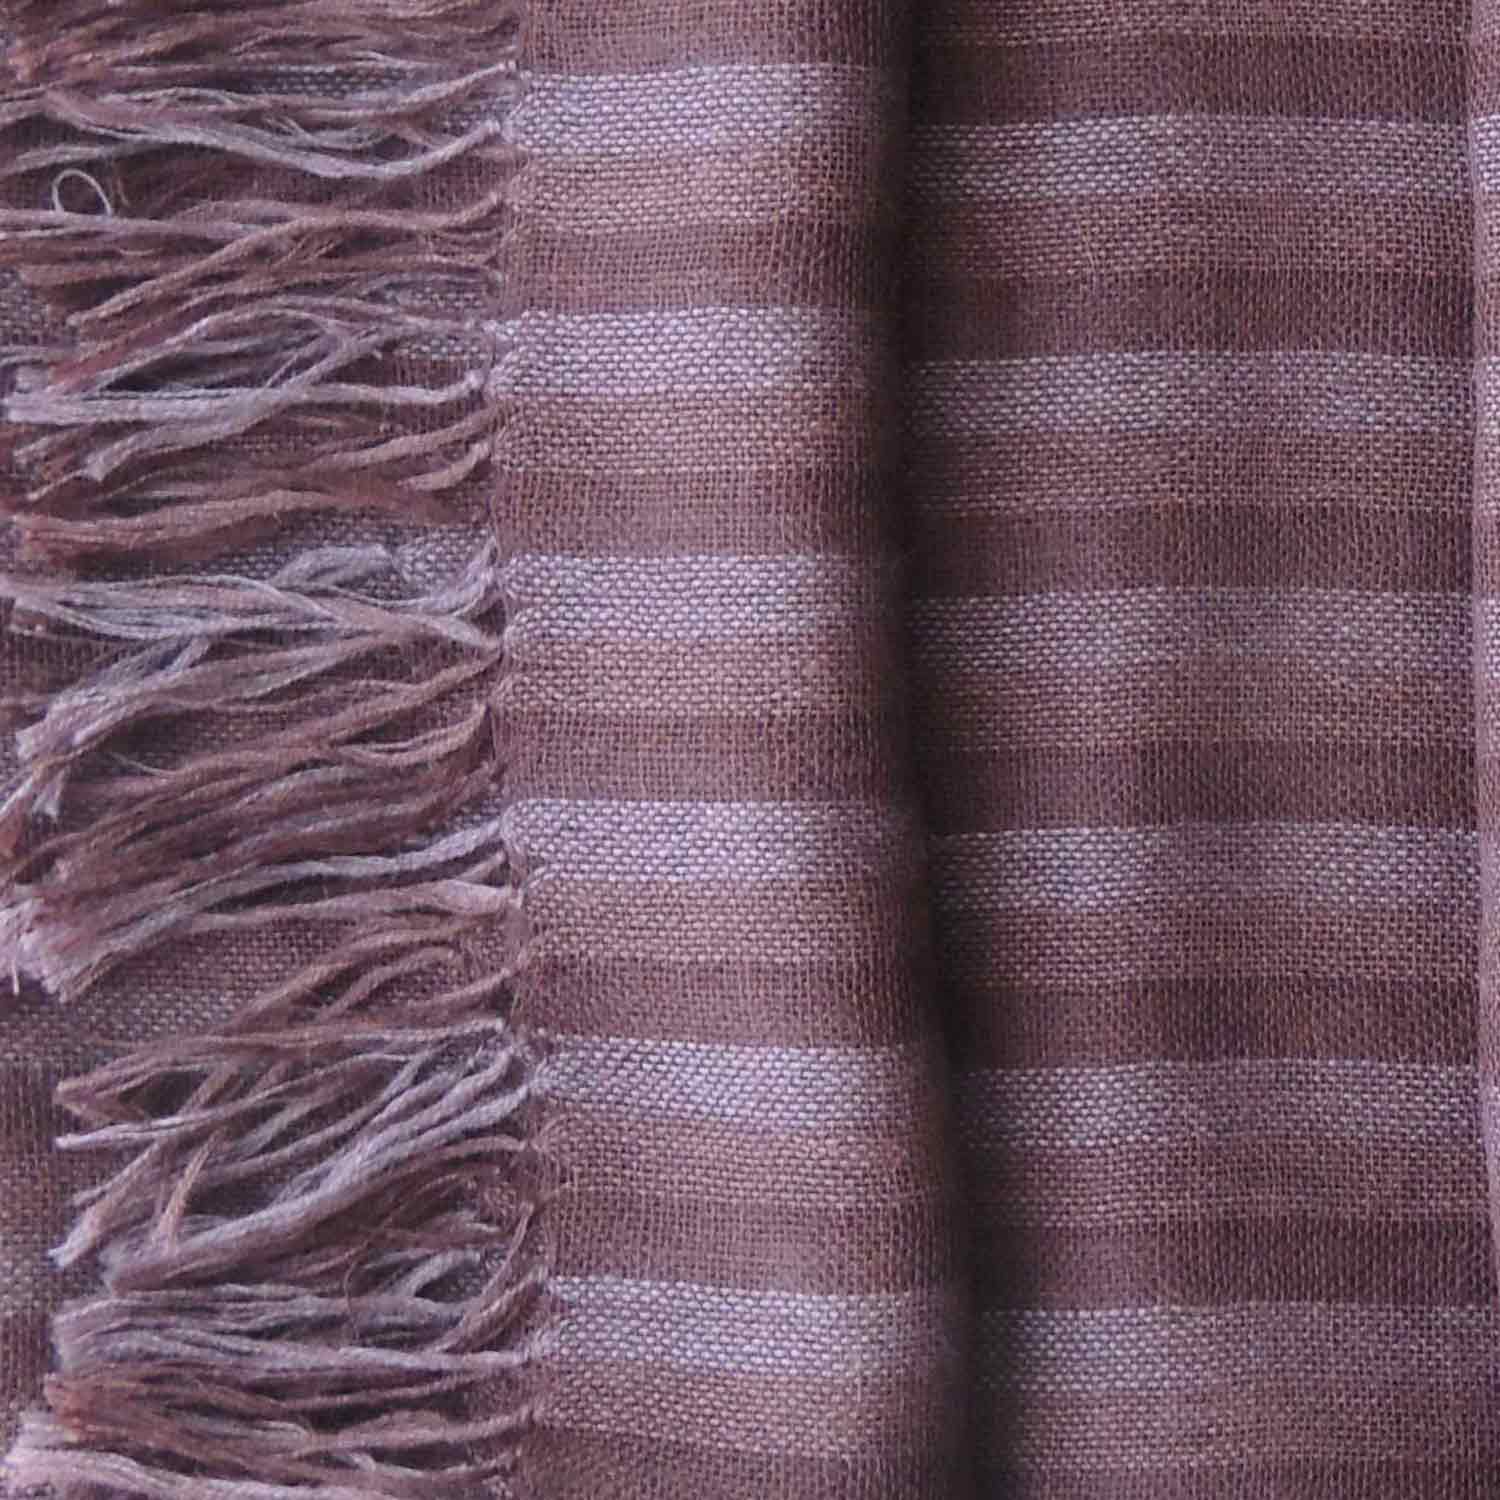 Popsfl Peru wholesale manufactor handwoven Shawl / Stole, super soft and lightweight 70% baby alpaca, 30% silk with fringes.